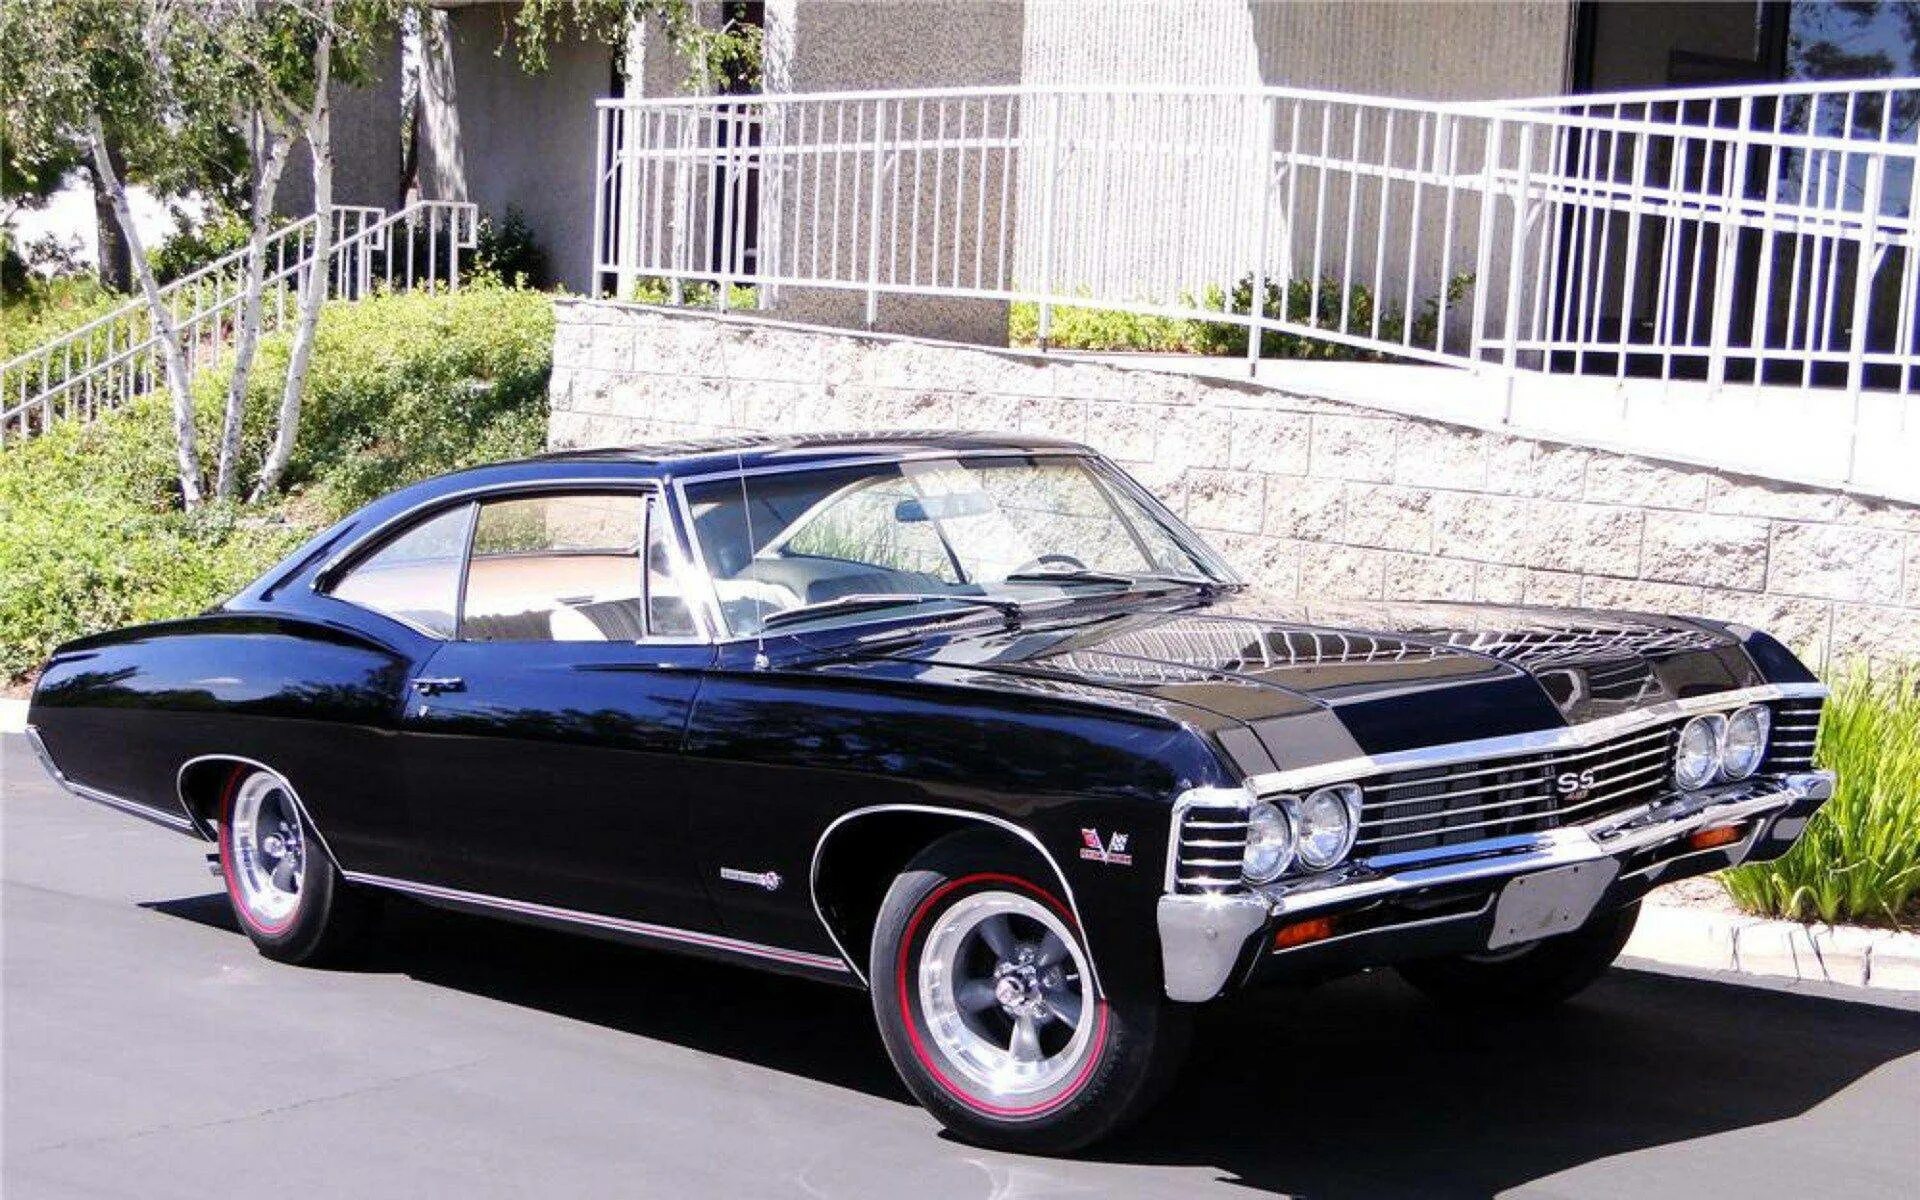 Шевроле Импала 1967. Chevrolet Impala SS 1967. Chevrolet Impala 1967 Hardtop. Chevrolet Impala 67.